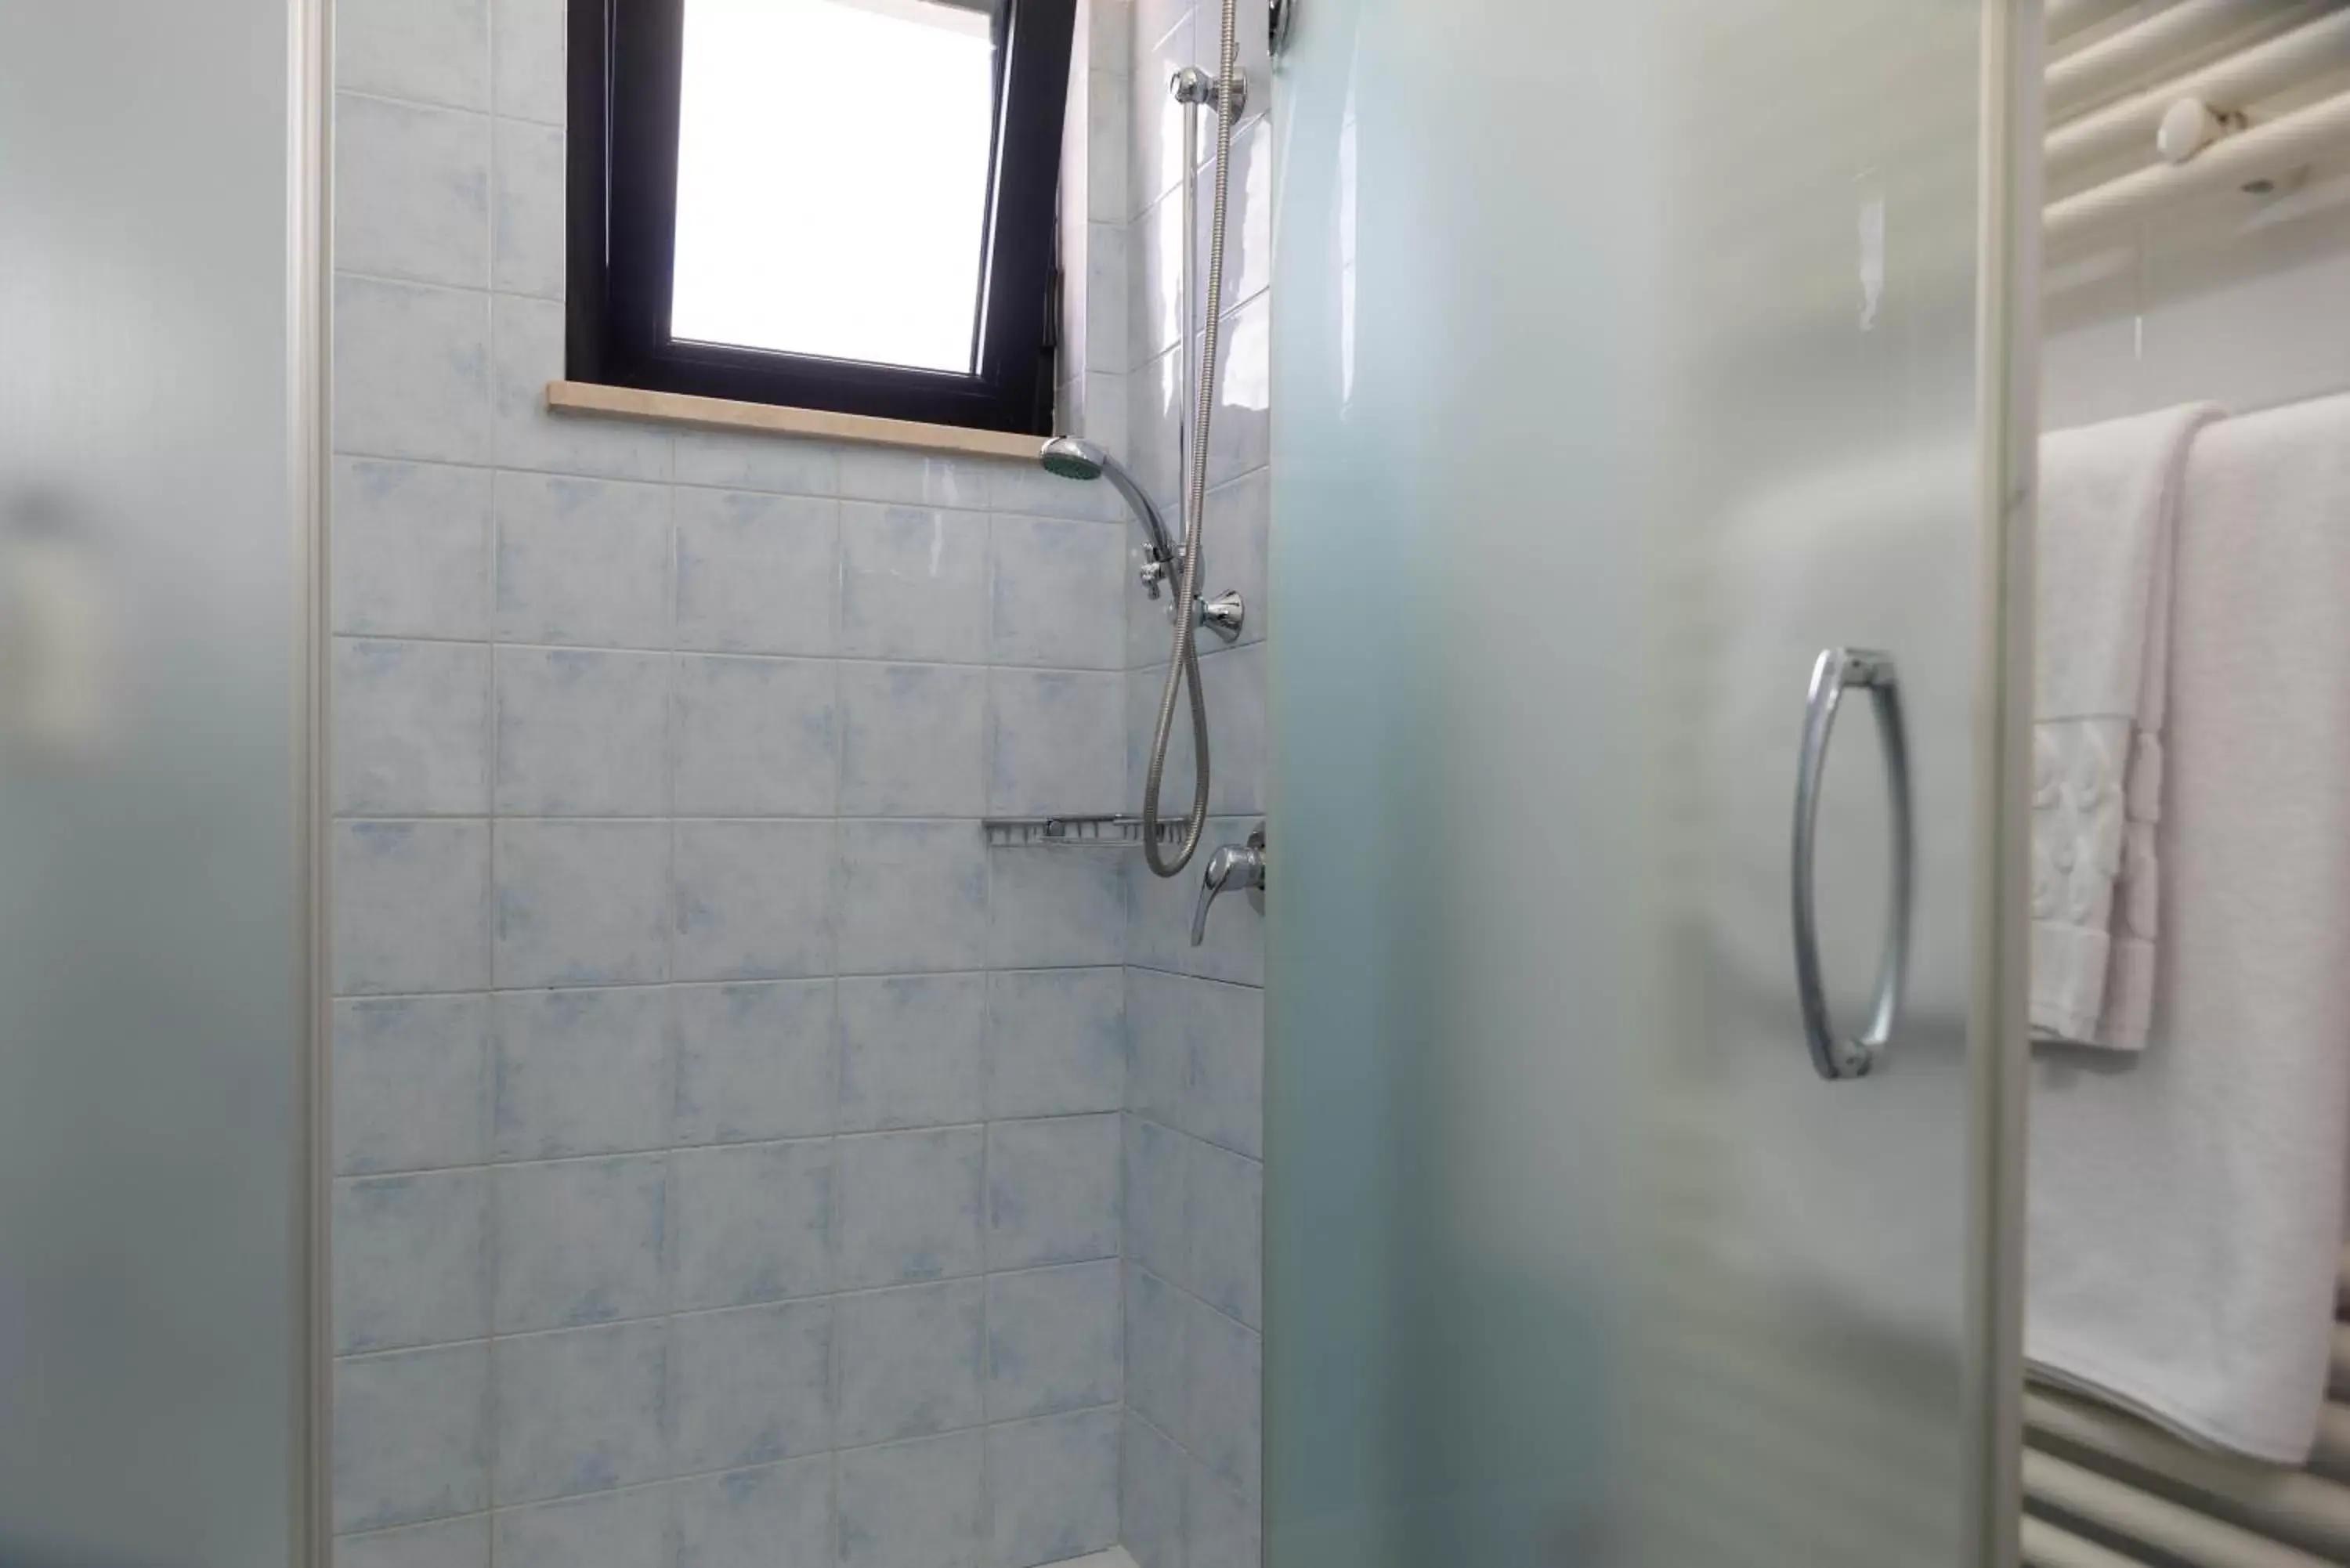 Bathroom in Edra Palace Hotel & Ristorante